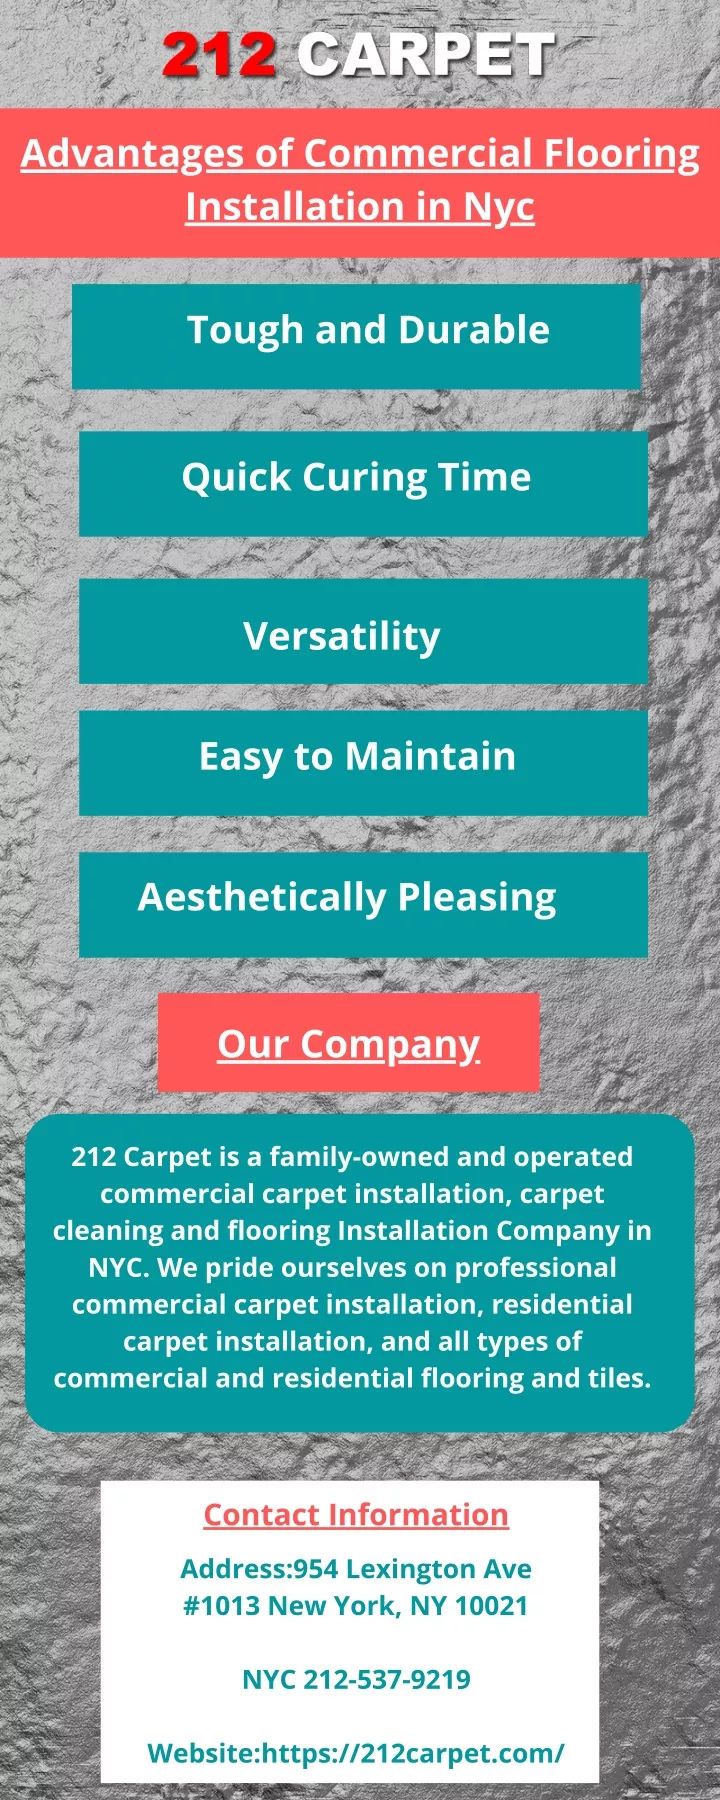 advantages of commercial flooring installation